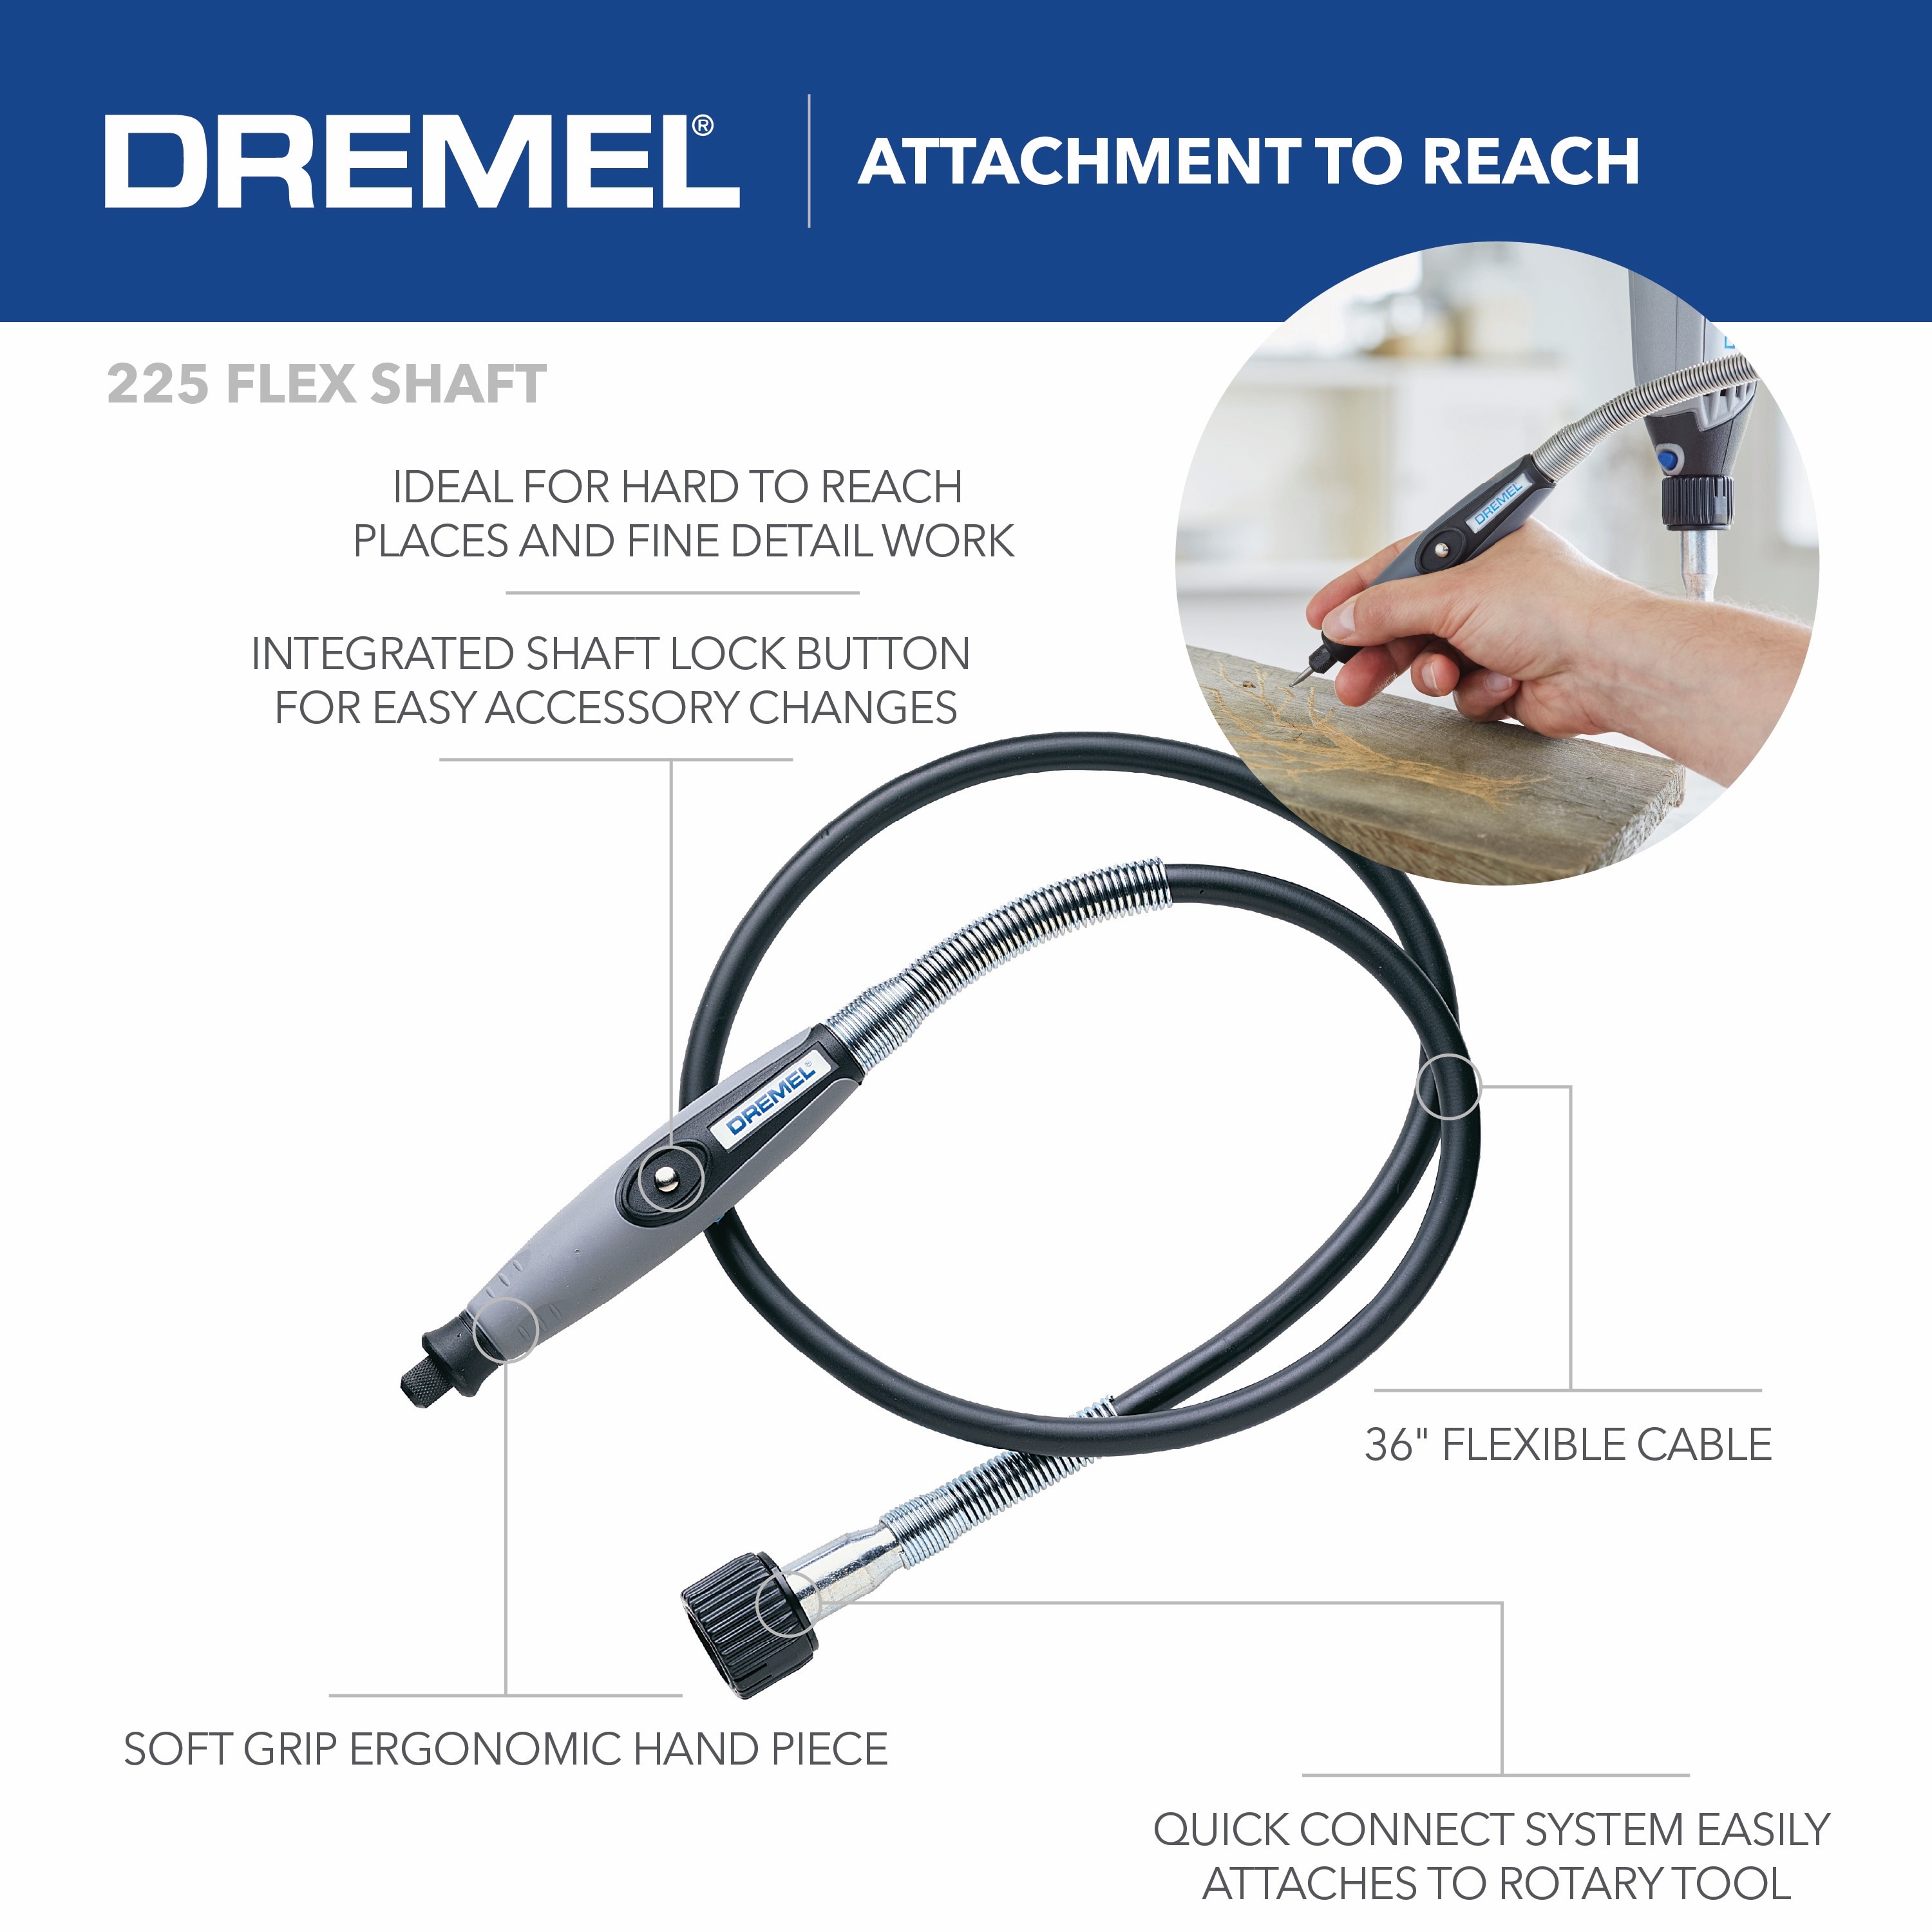 Dremel 4000-6/50 High Performance Corded Rotary Tool Kit, 120 V, 1.6 Amp